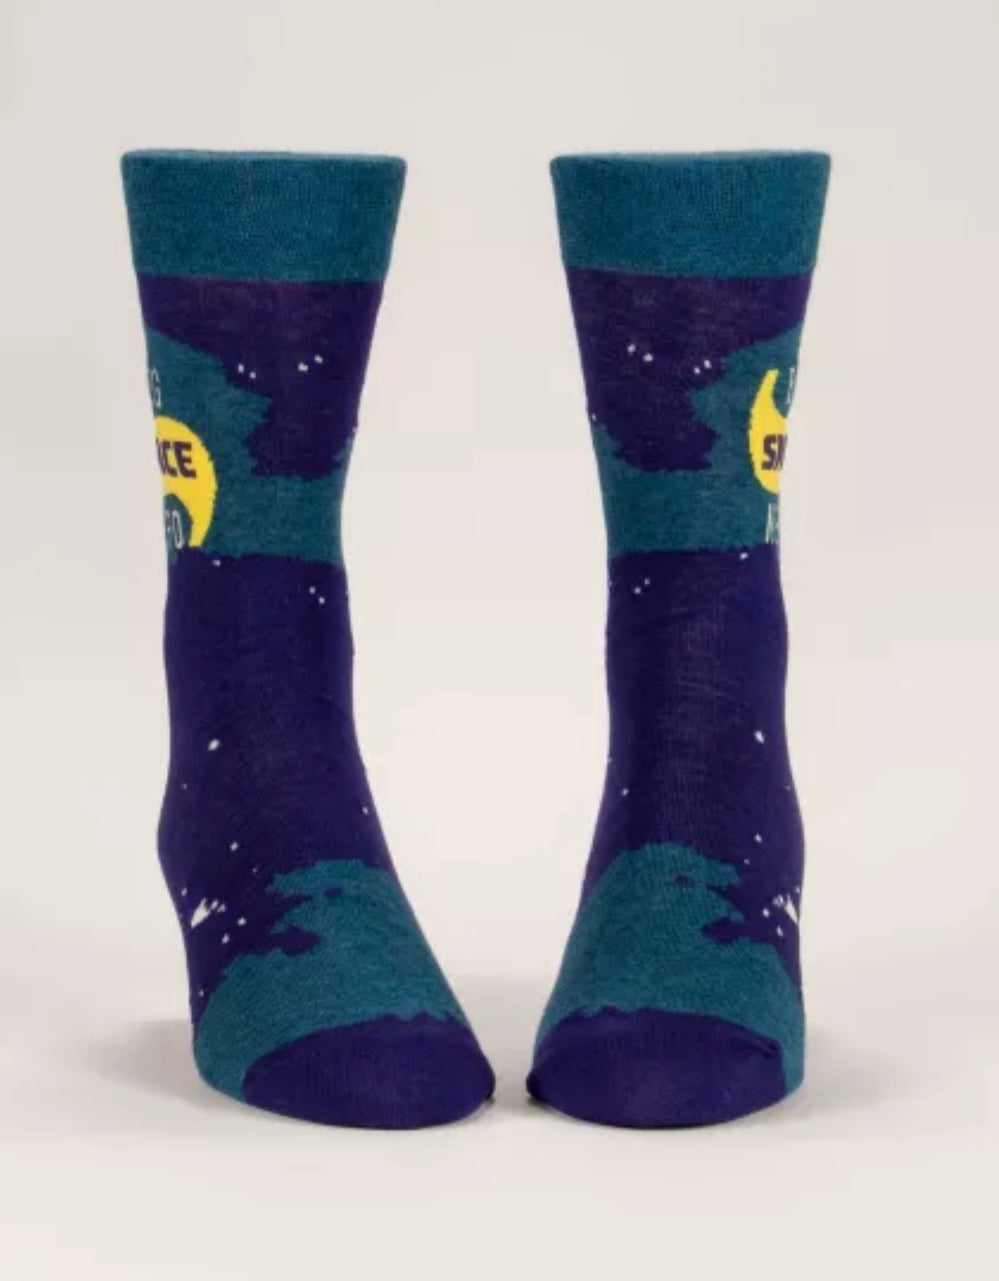 Big Space Nerd Men's Crew Novelty Blue Q Socks